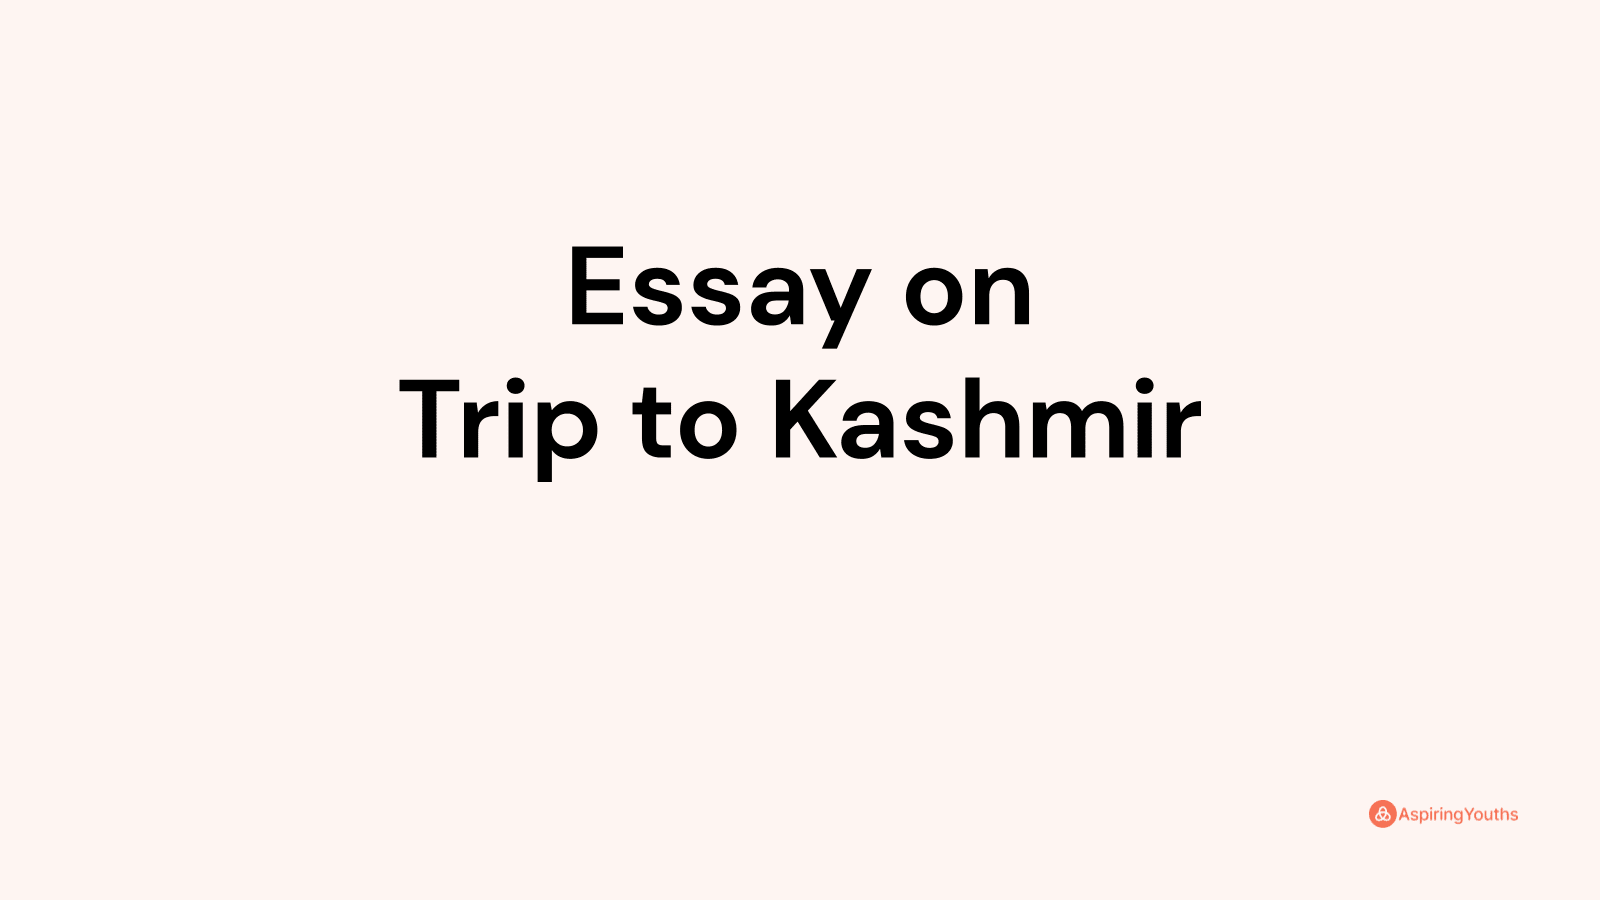 Essay on Trip to Kashmir